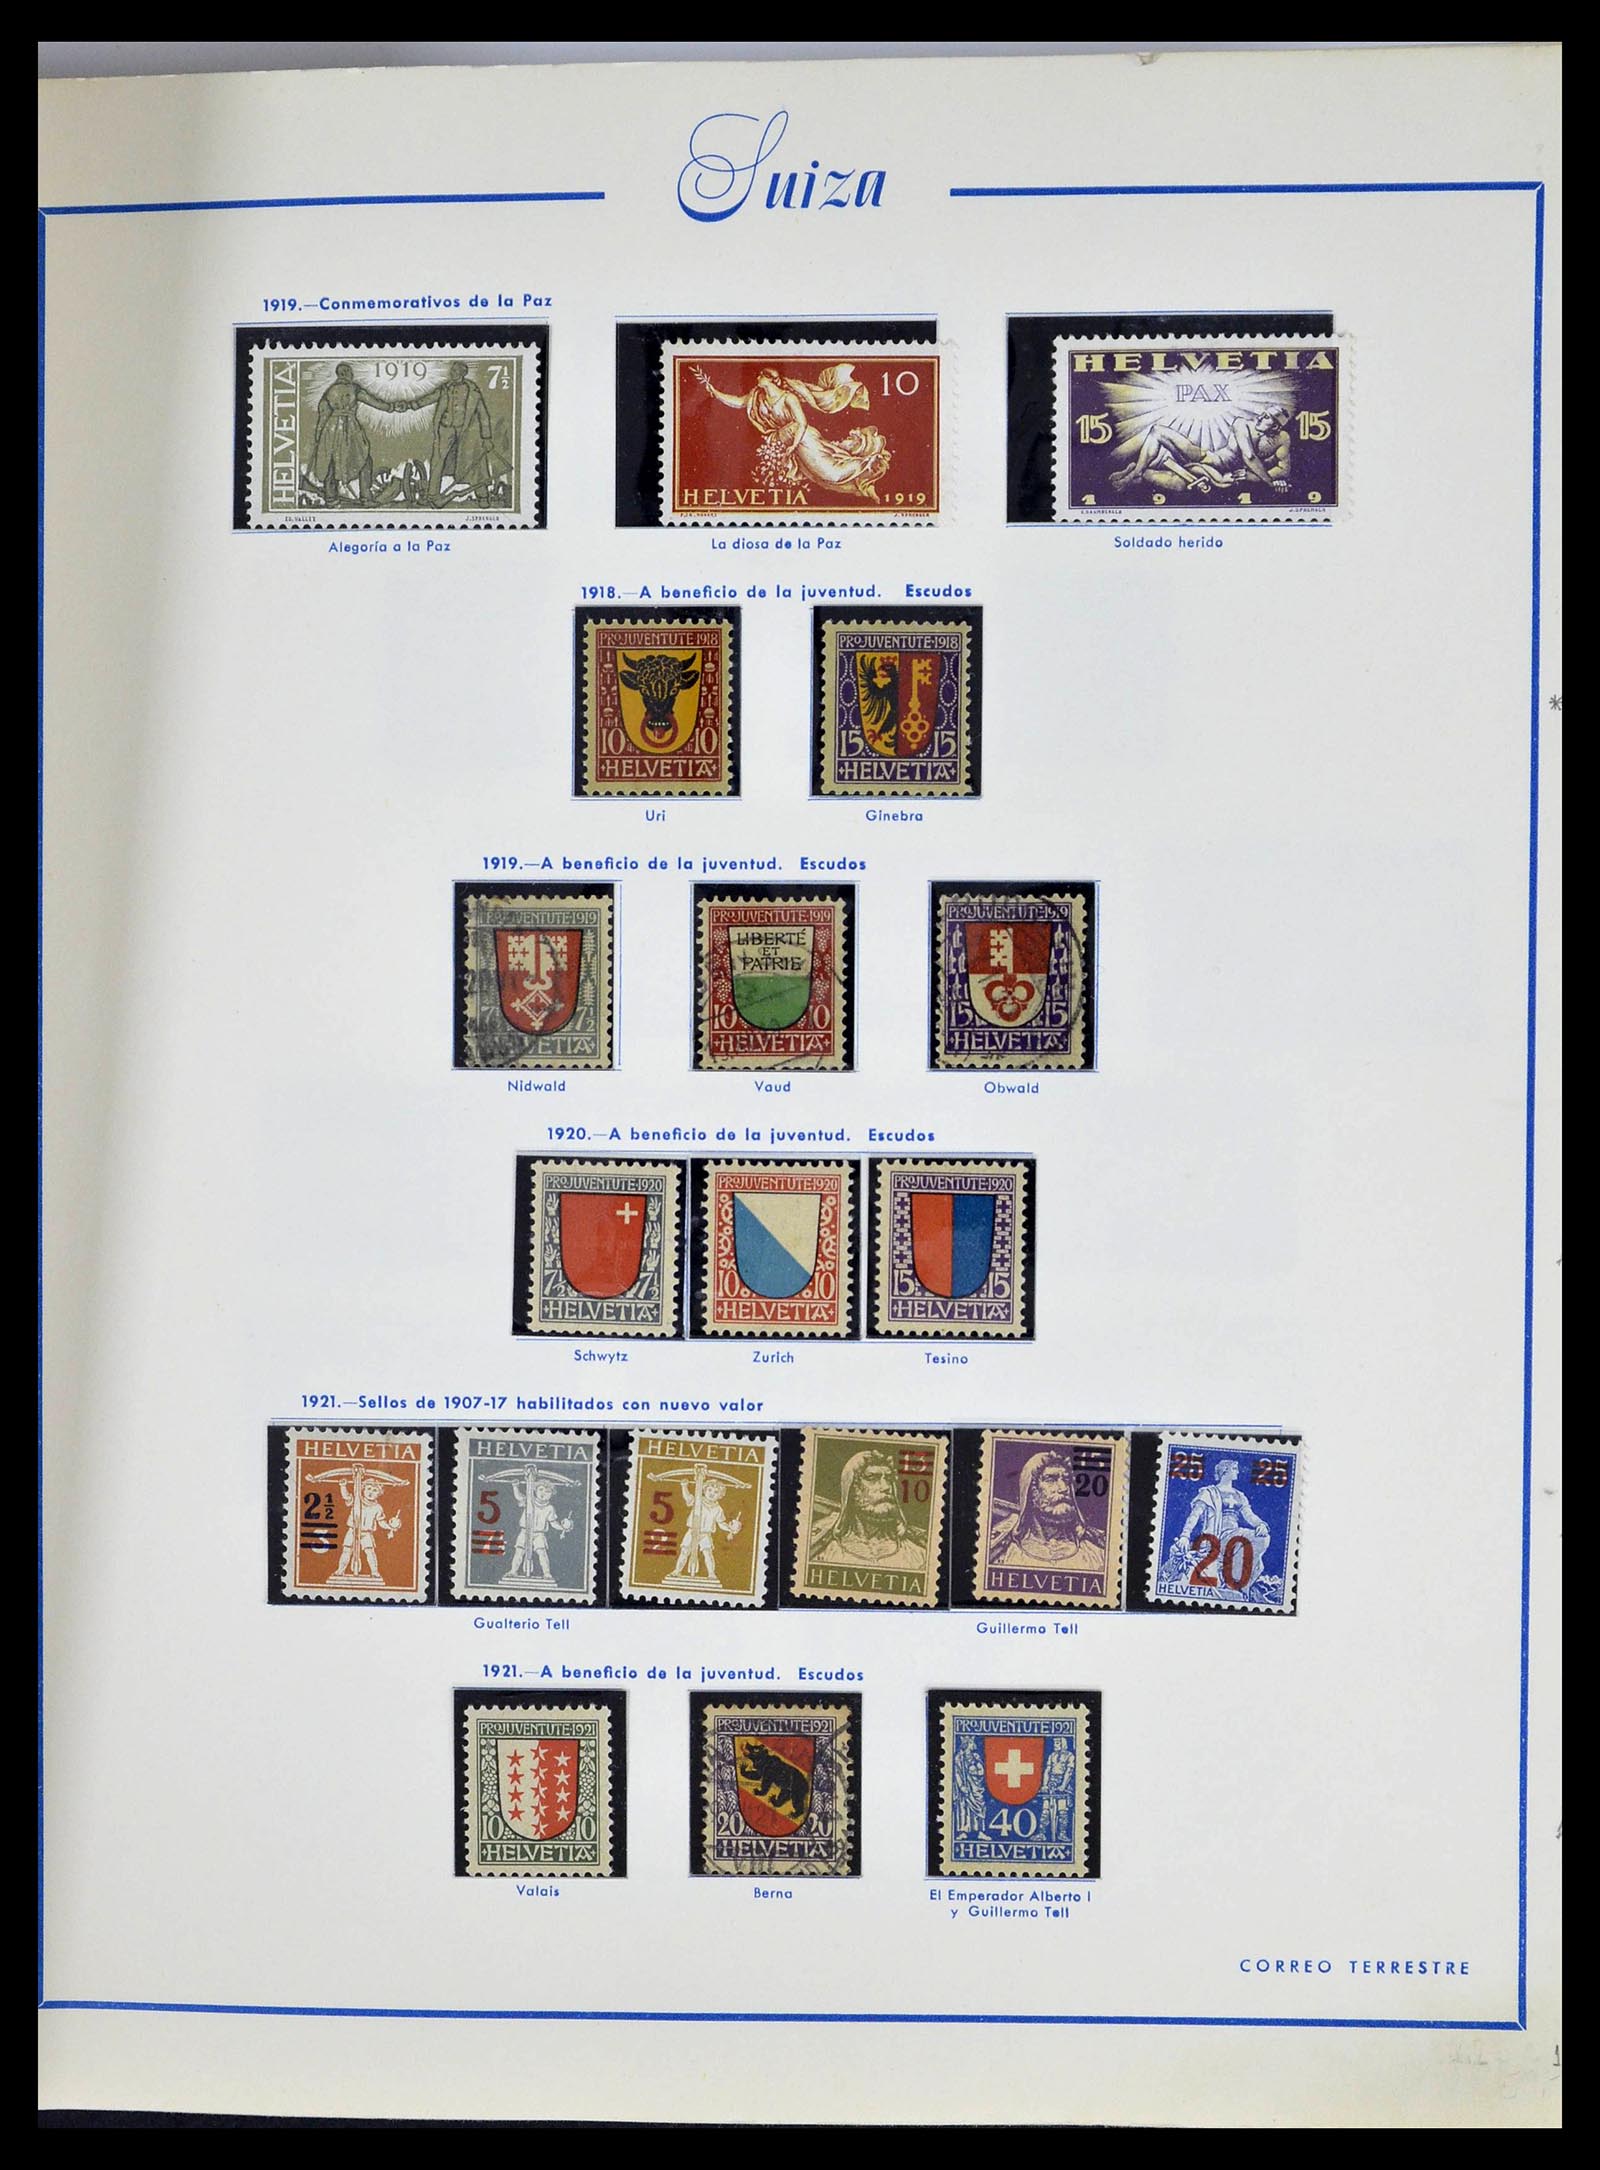 39217 0011 - Stamp collection 39217 Switzerland 1850-1986.